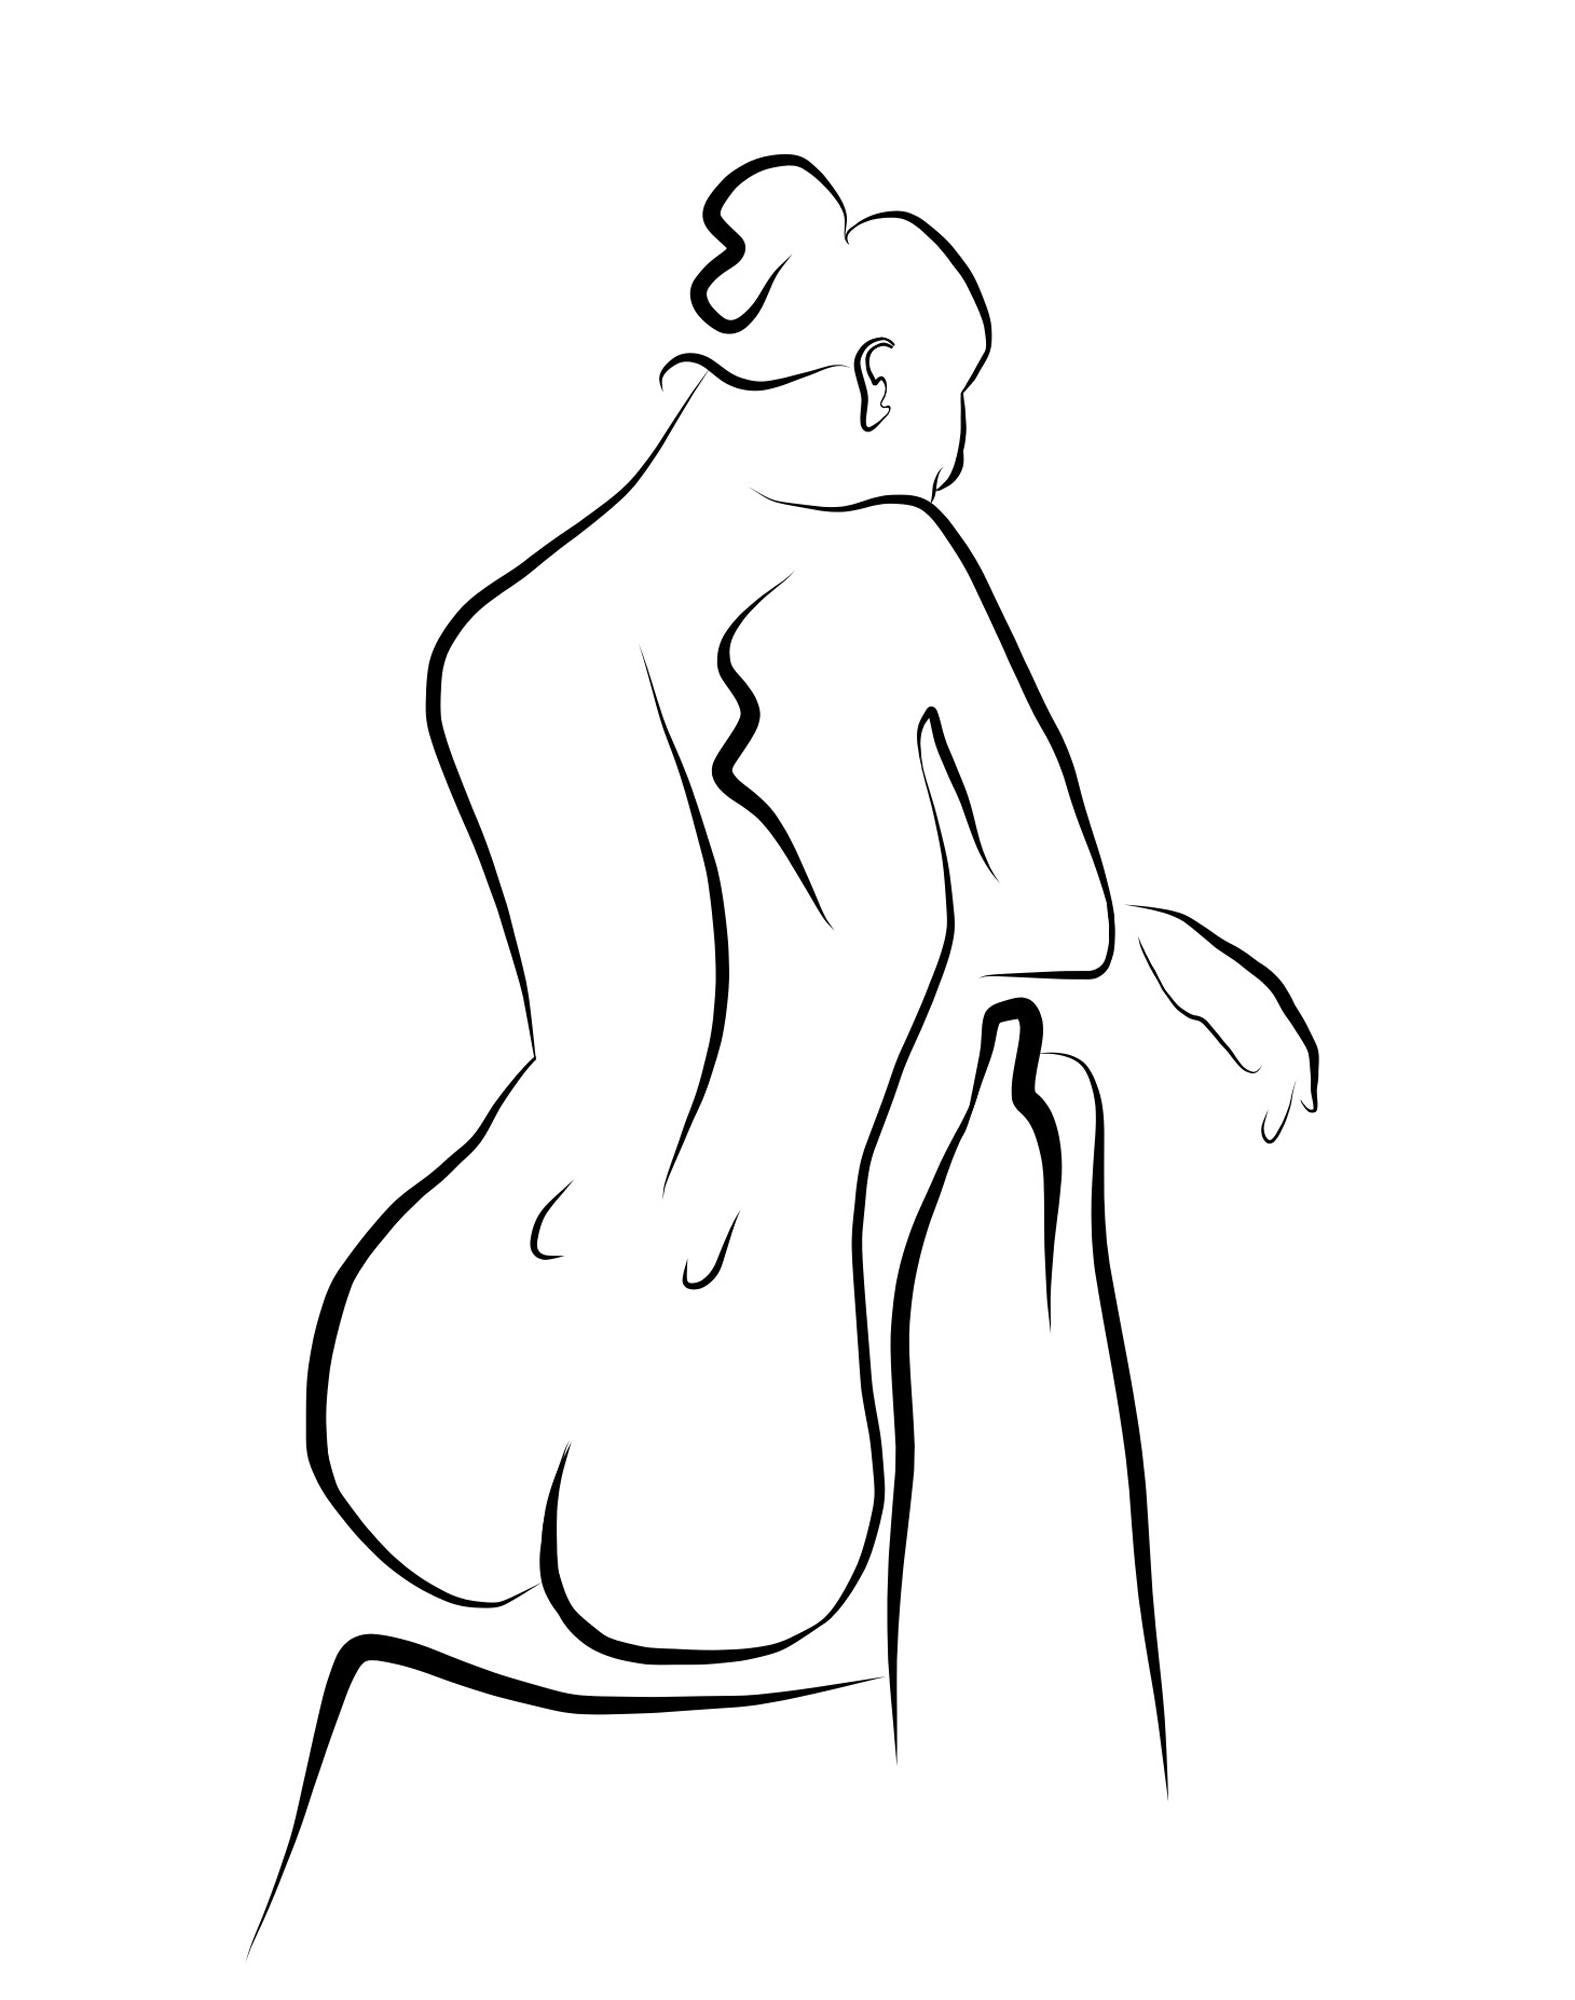 Haiku #57, 1/50 - Digital Vector Drawing Seated Female Nude From Rear